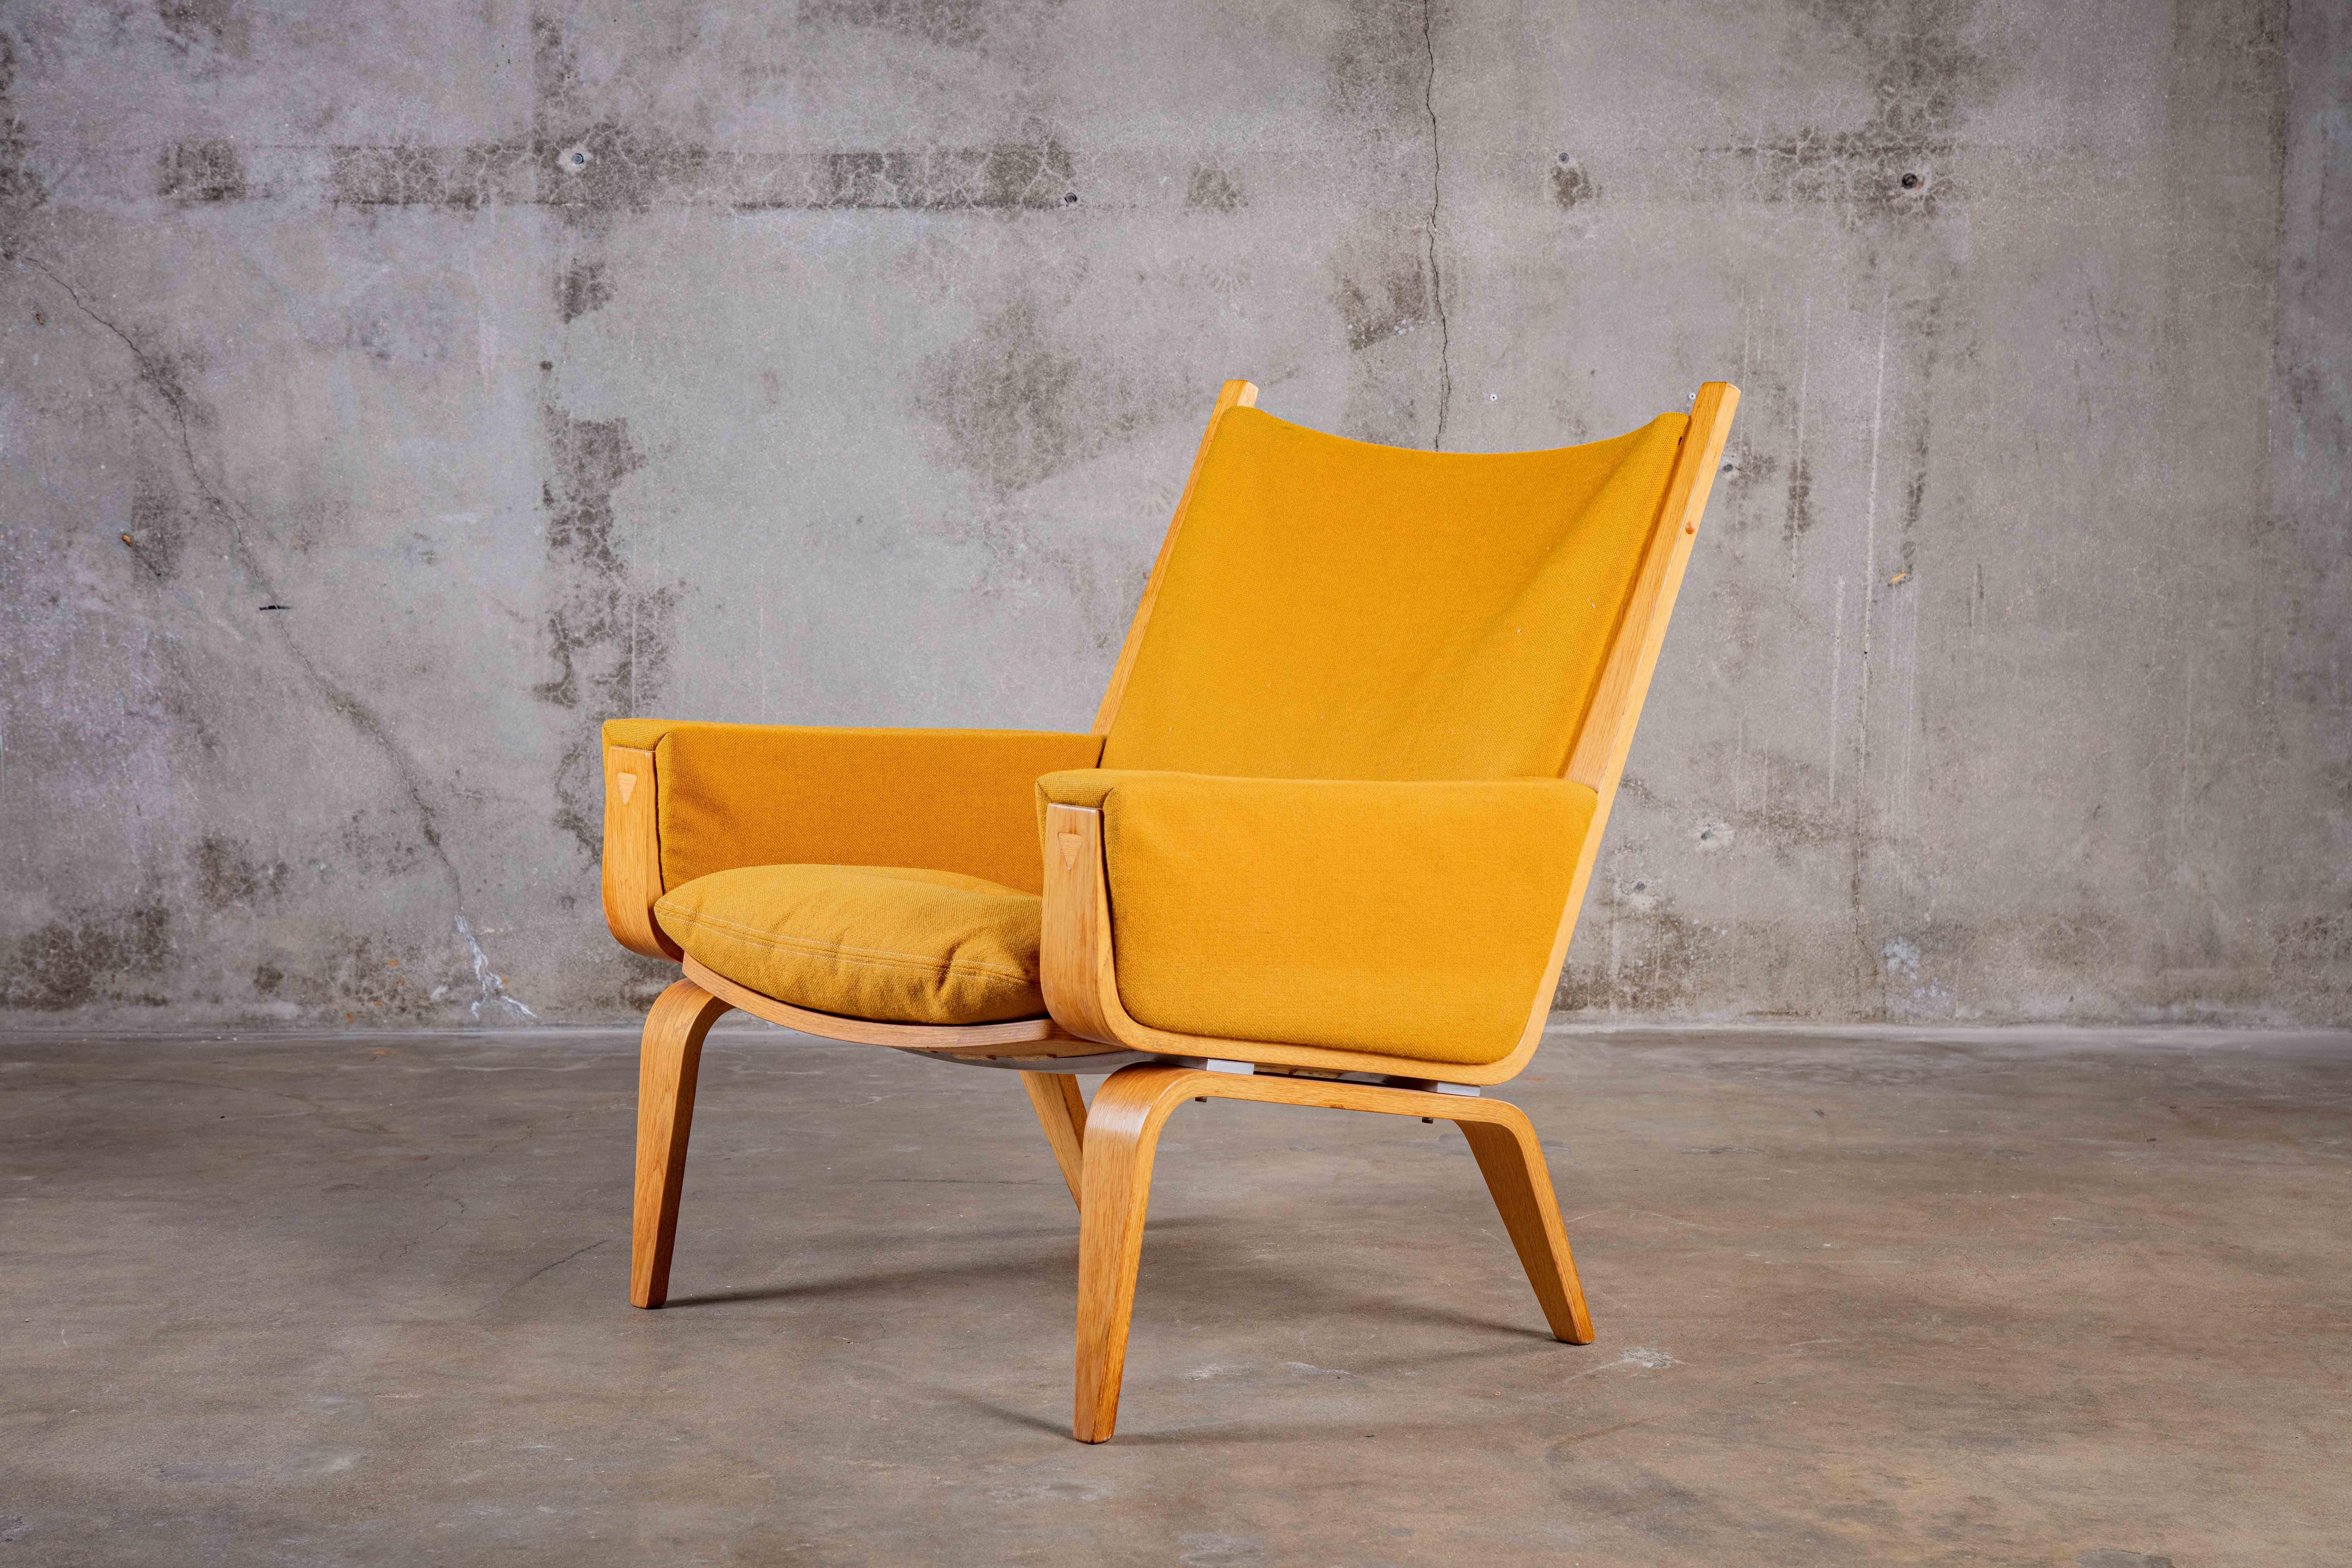 Hans Wegner lounge chair, GETAMA

Measures: Arm 21